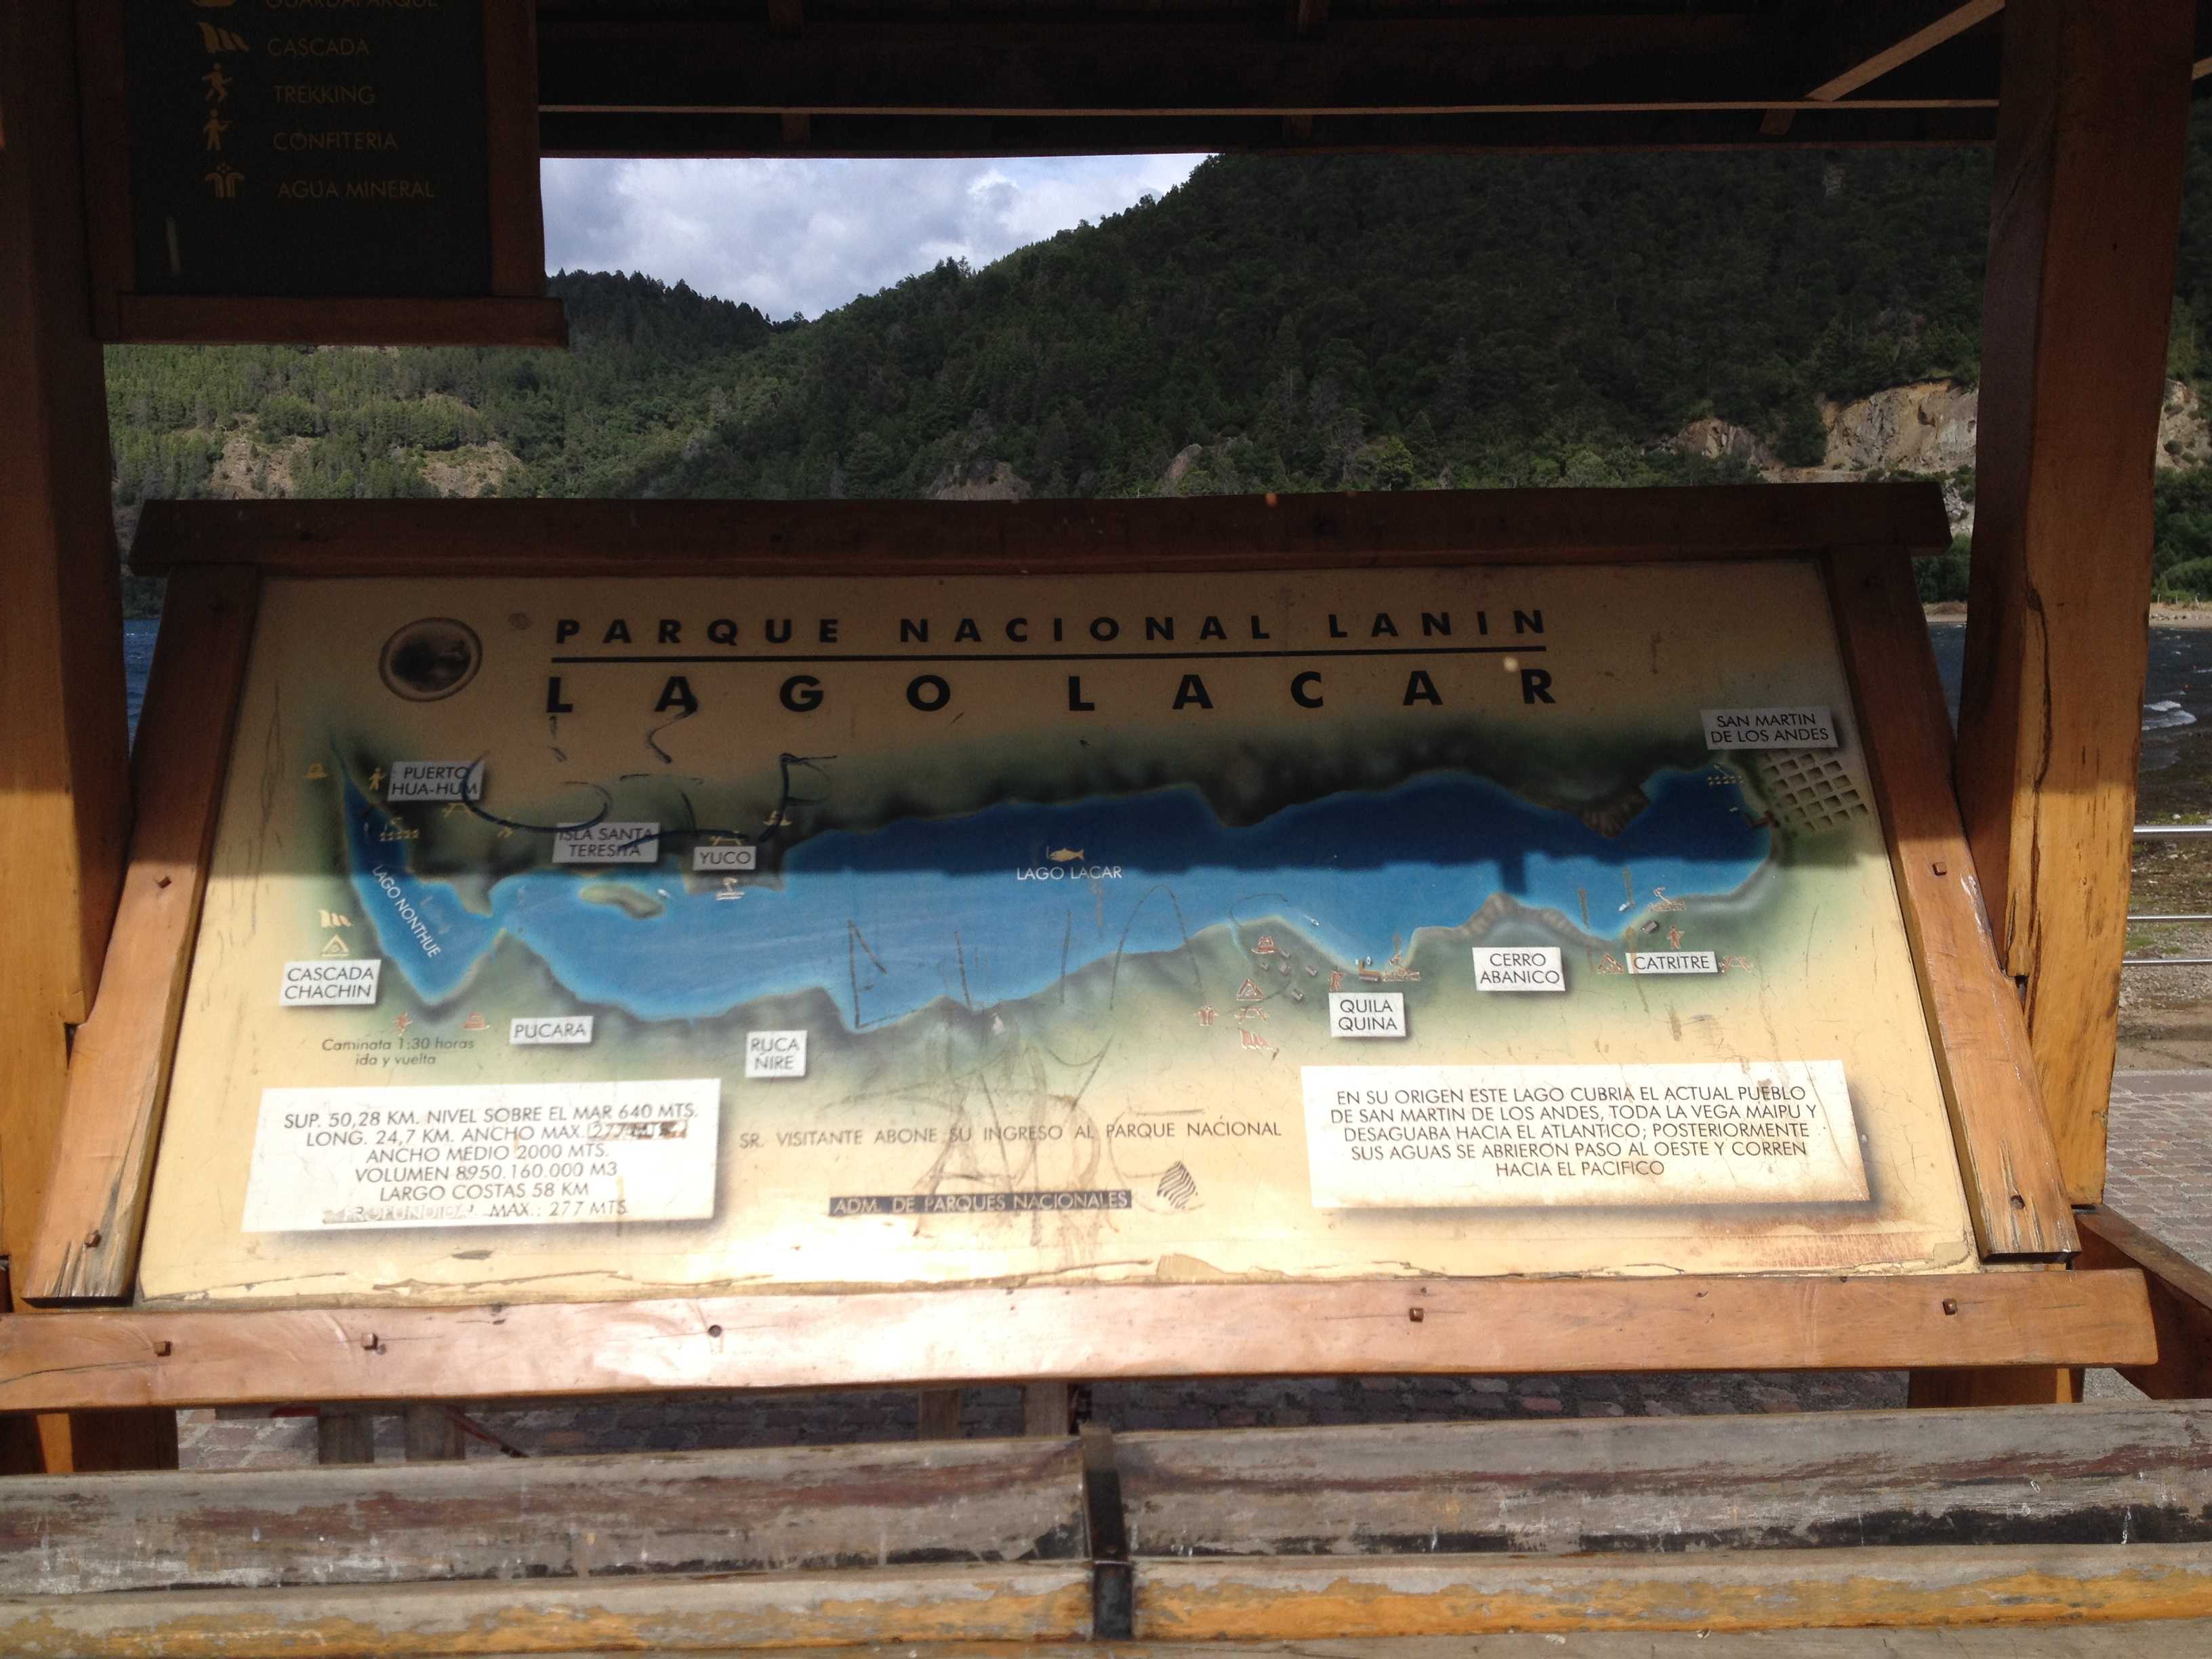 Parque Nacional LANIN - Lago LACAR